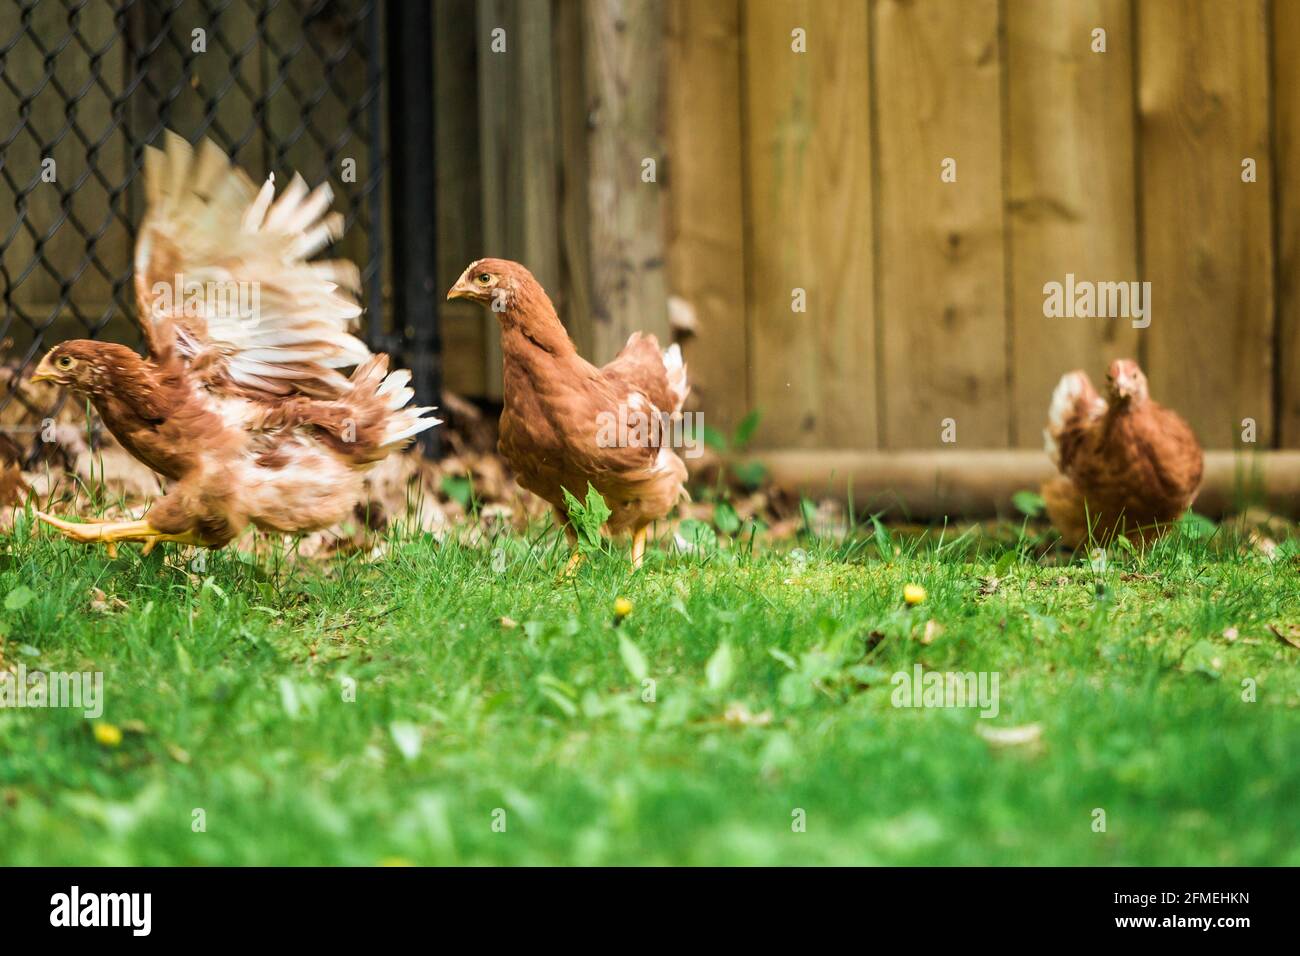 Chickens in suburban backyard Stock Photo